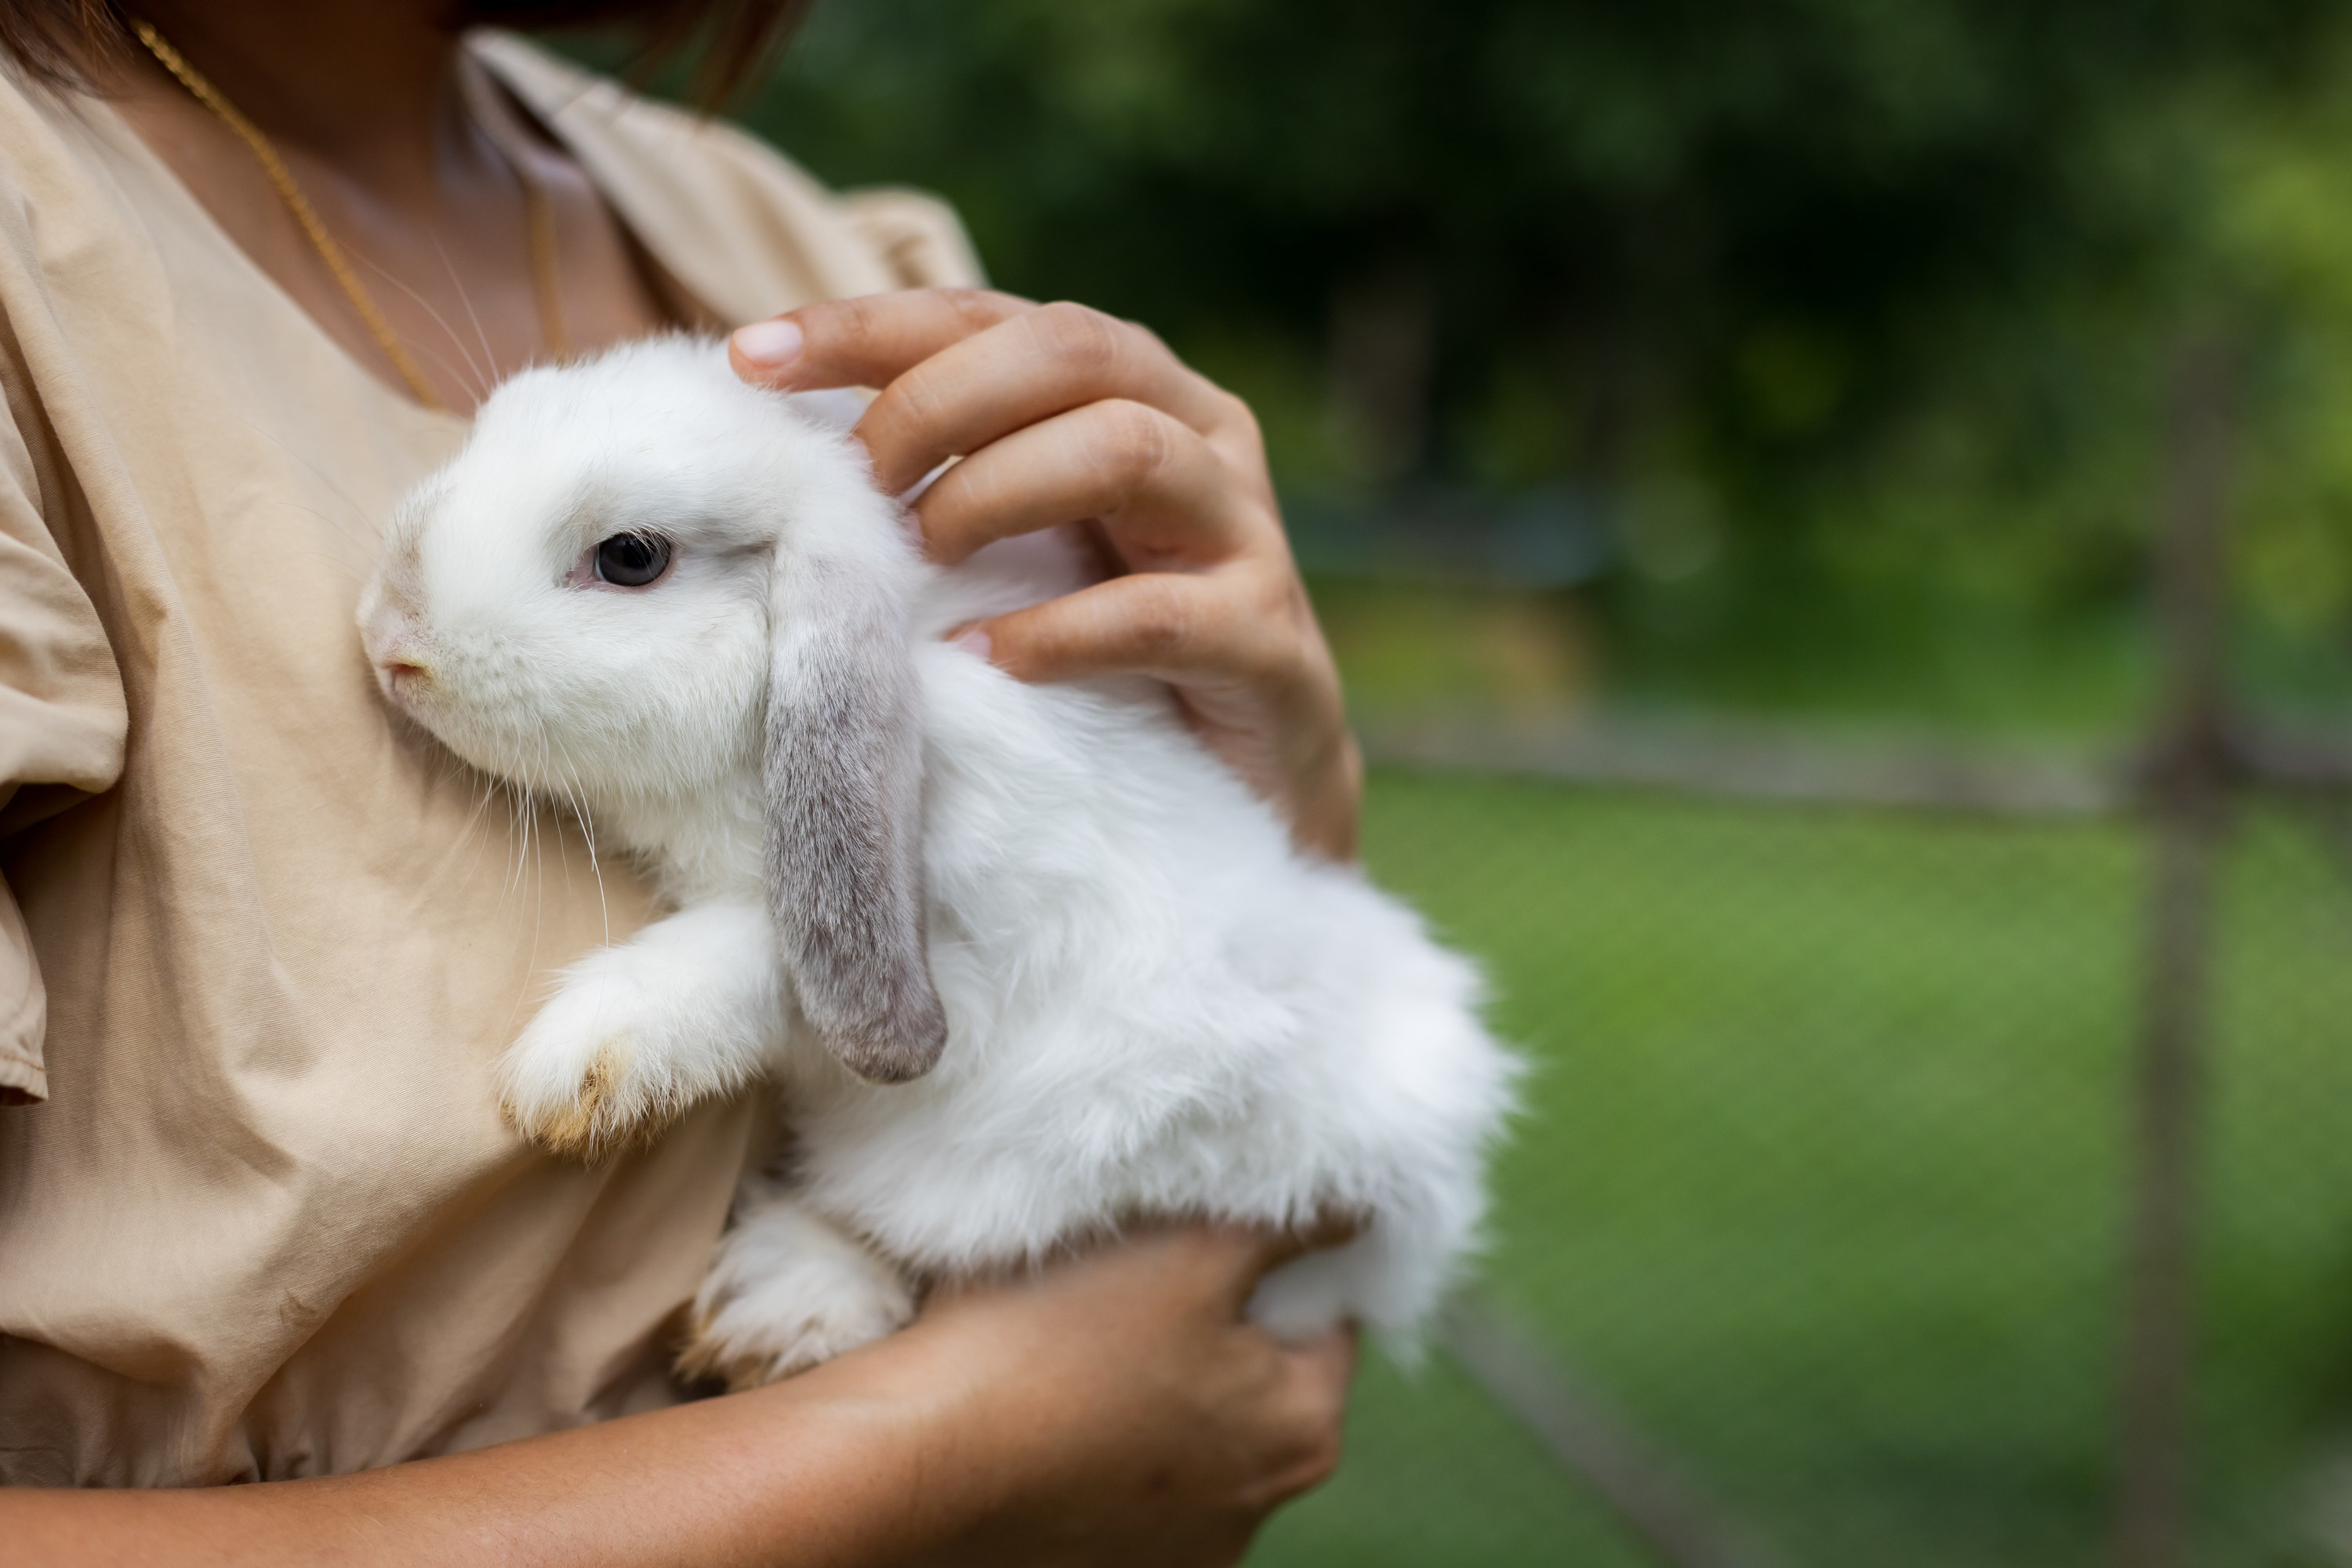 a person cuddling a small bunny